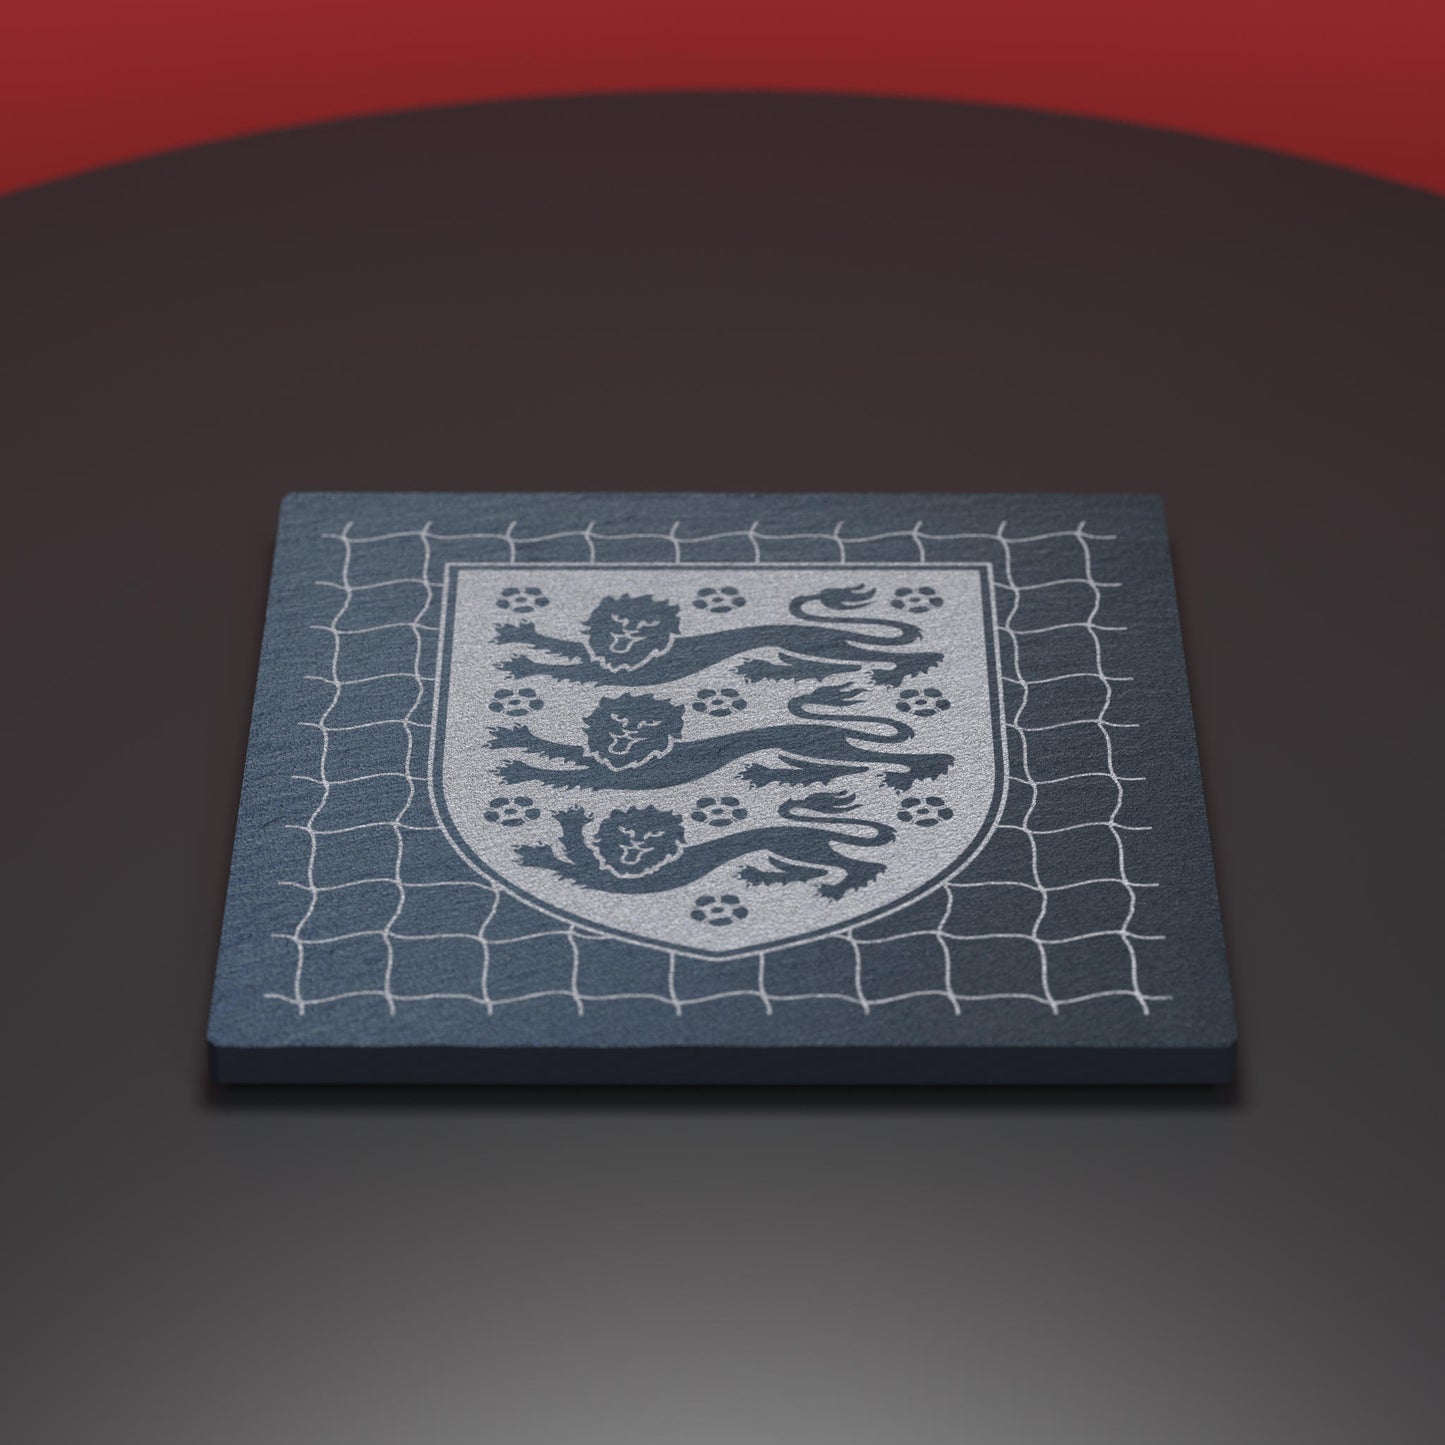 slate coaster with England football logo and net design